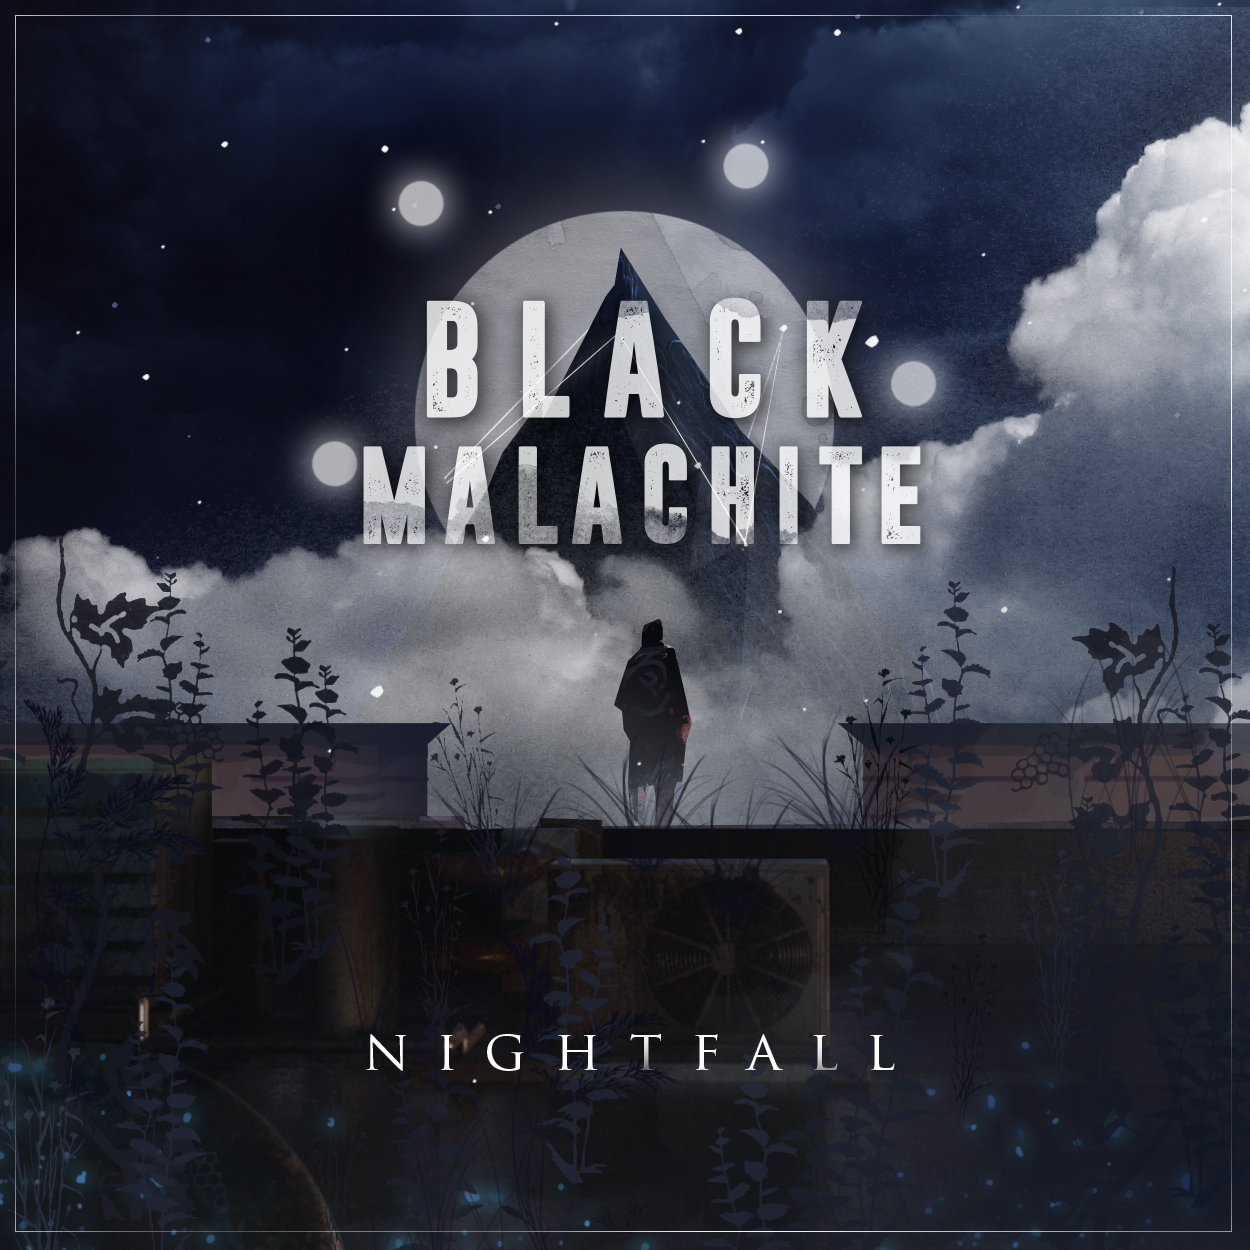 Black Malachite - Nightfall